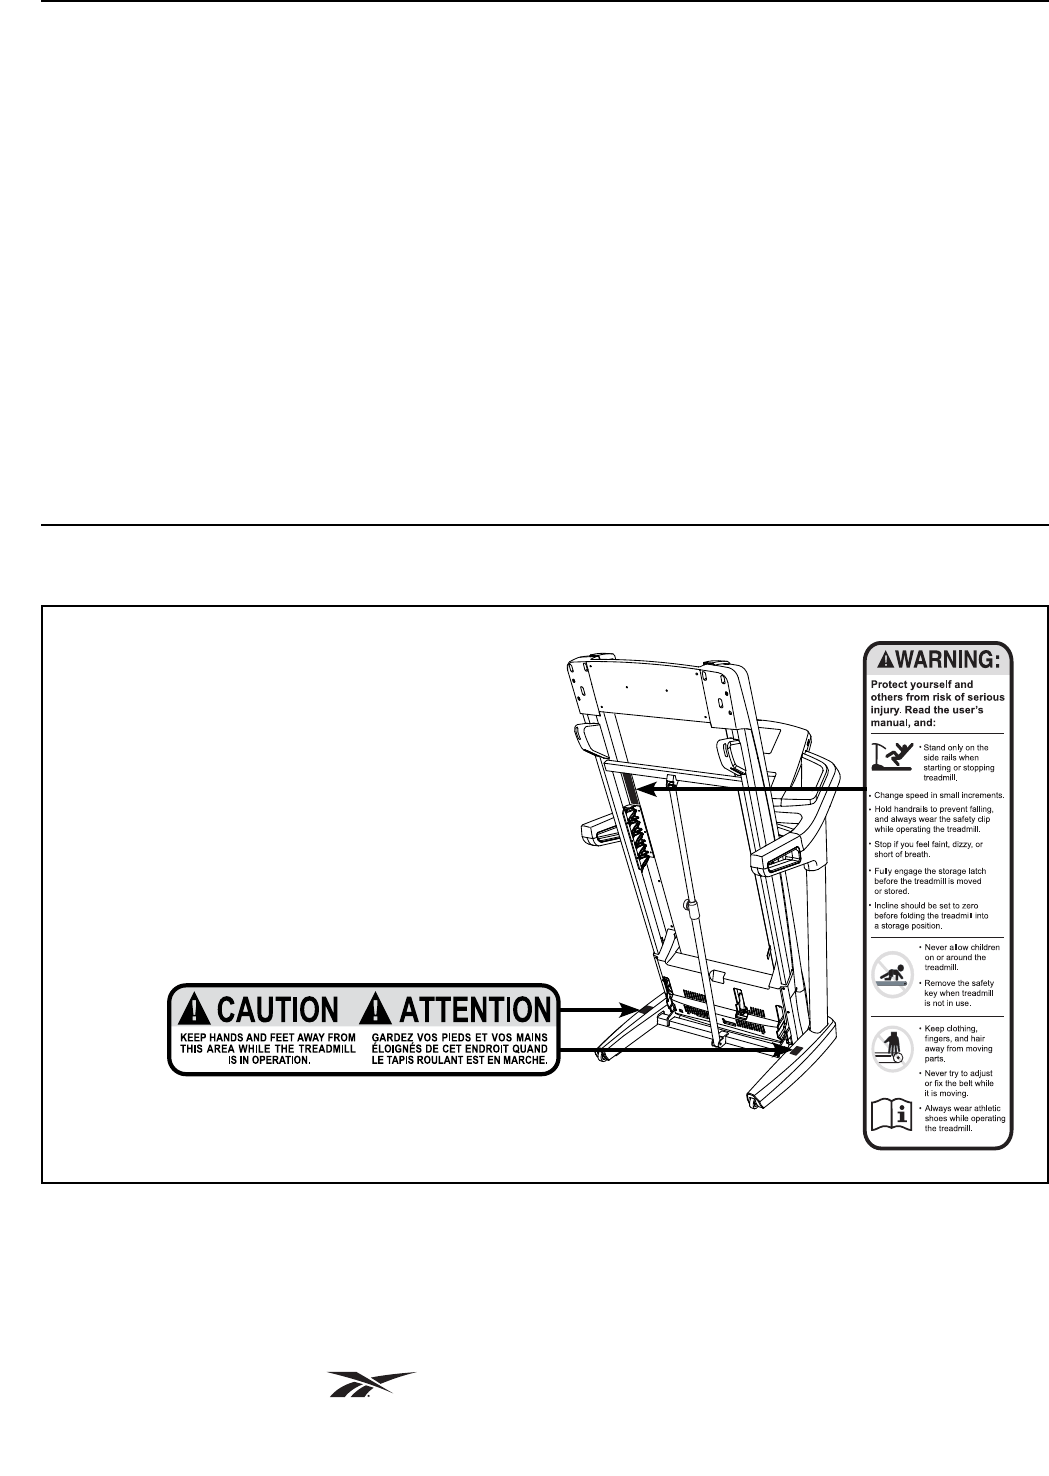 reebok 910 treadmill owners manual